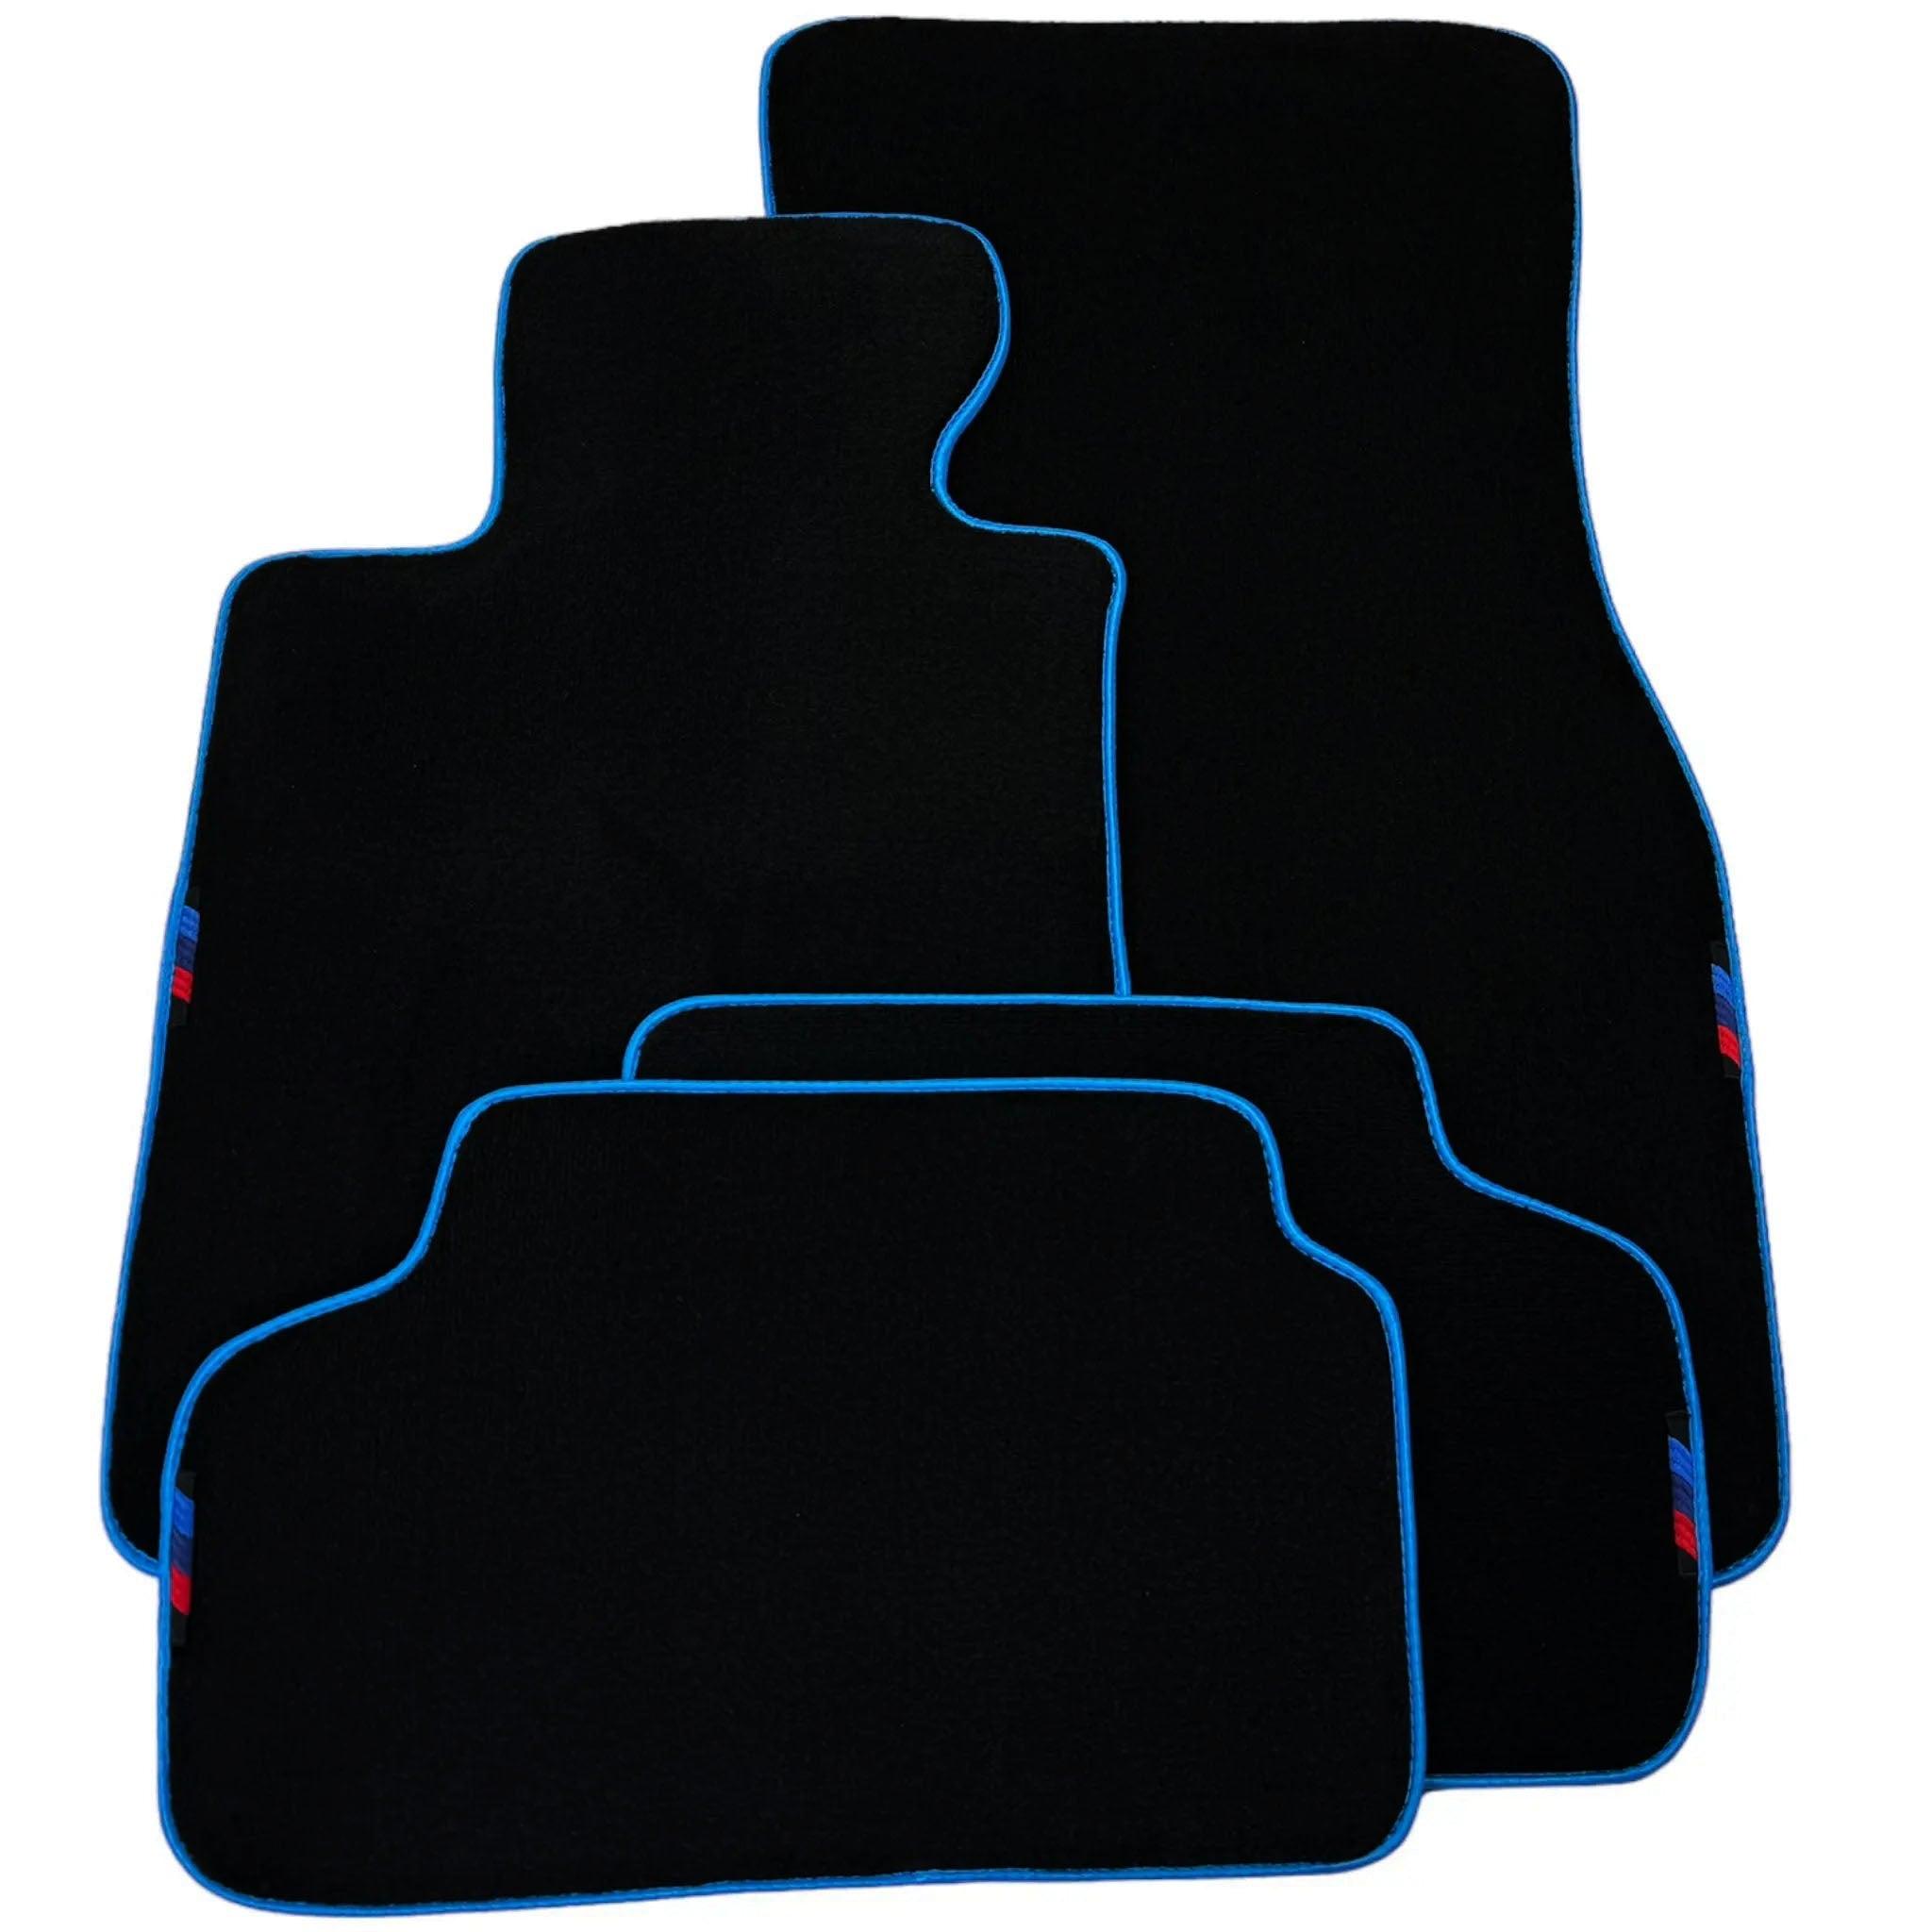 Black Floor Floor Mats For BMW 7 Series F01 | Fighter Jet Edition AutoWin Brand |Sky Blue Trim